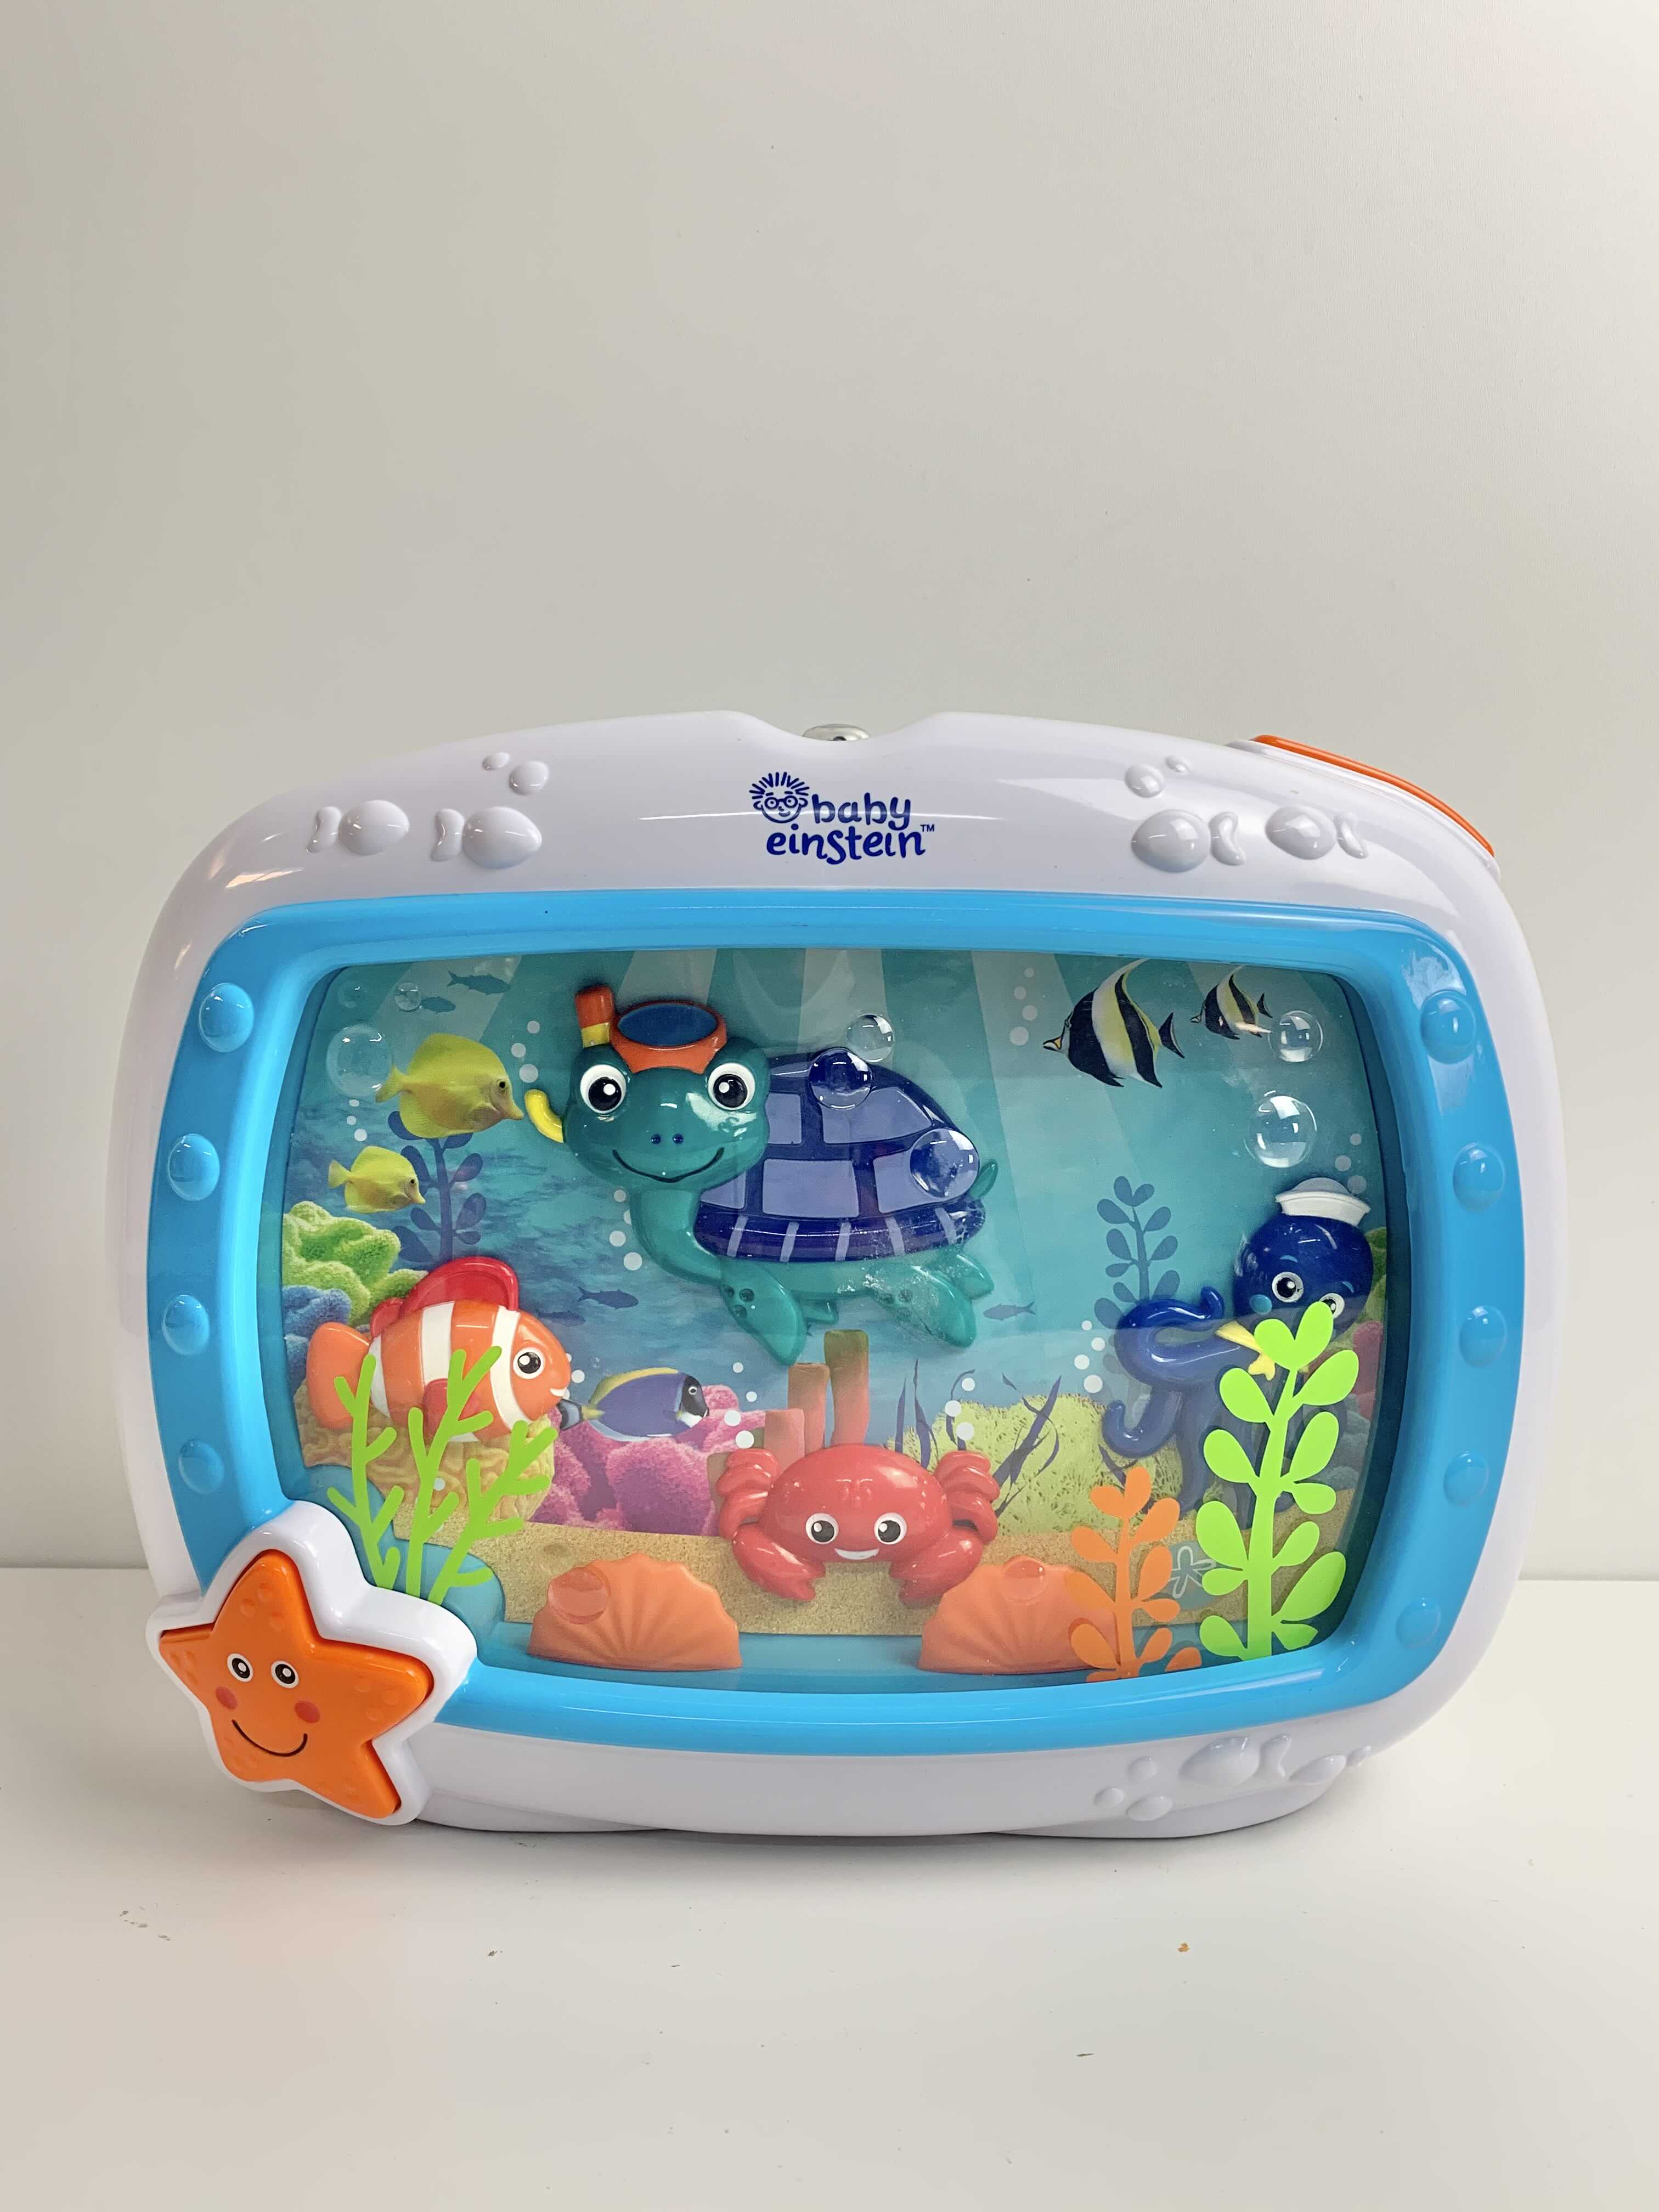 Baby Einstein Sea Dreams Soother Crib Toy Fish Aquarium w/Sounds Working